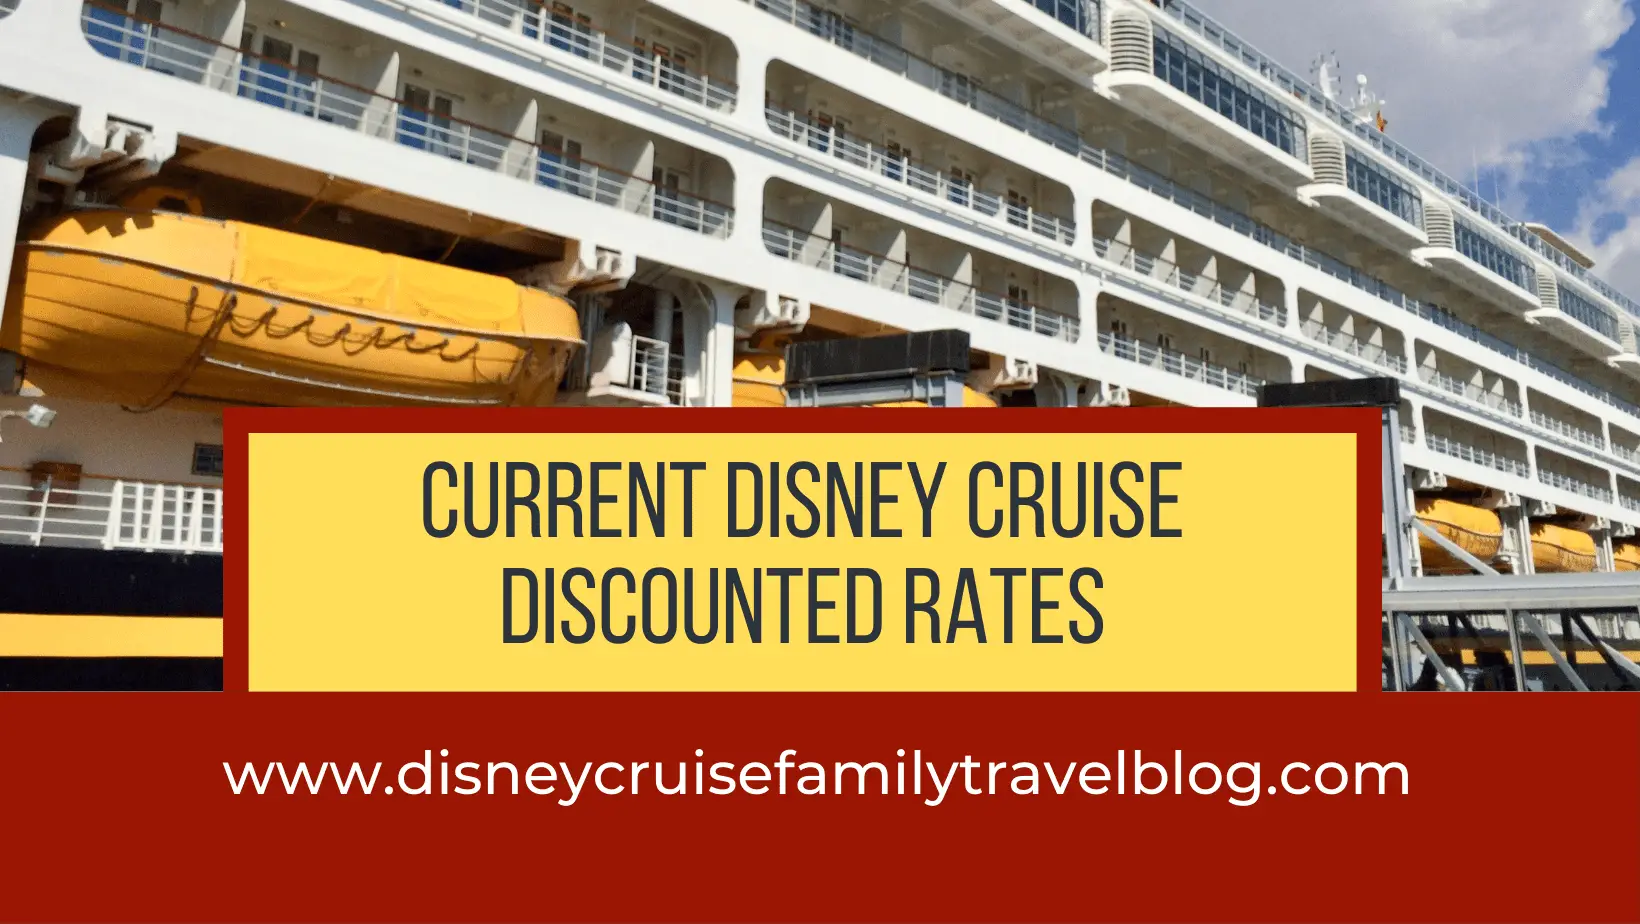 Current Disney Cruise Discounts October 5, 2022 The Disney Cruise